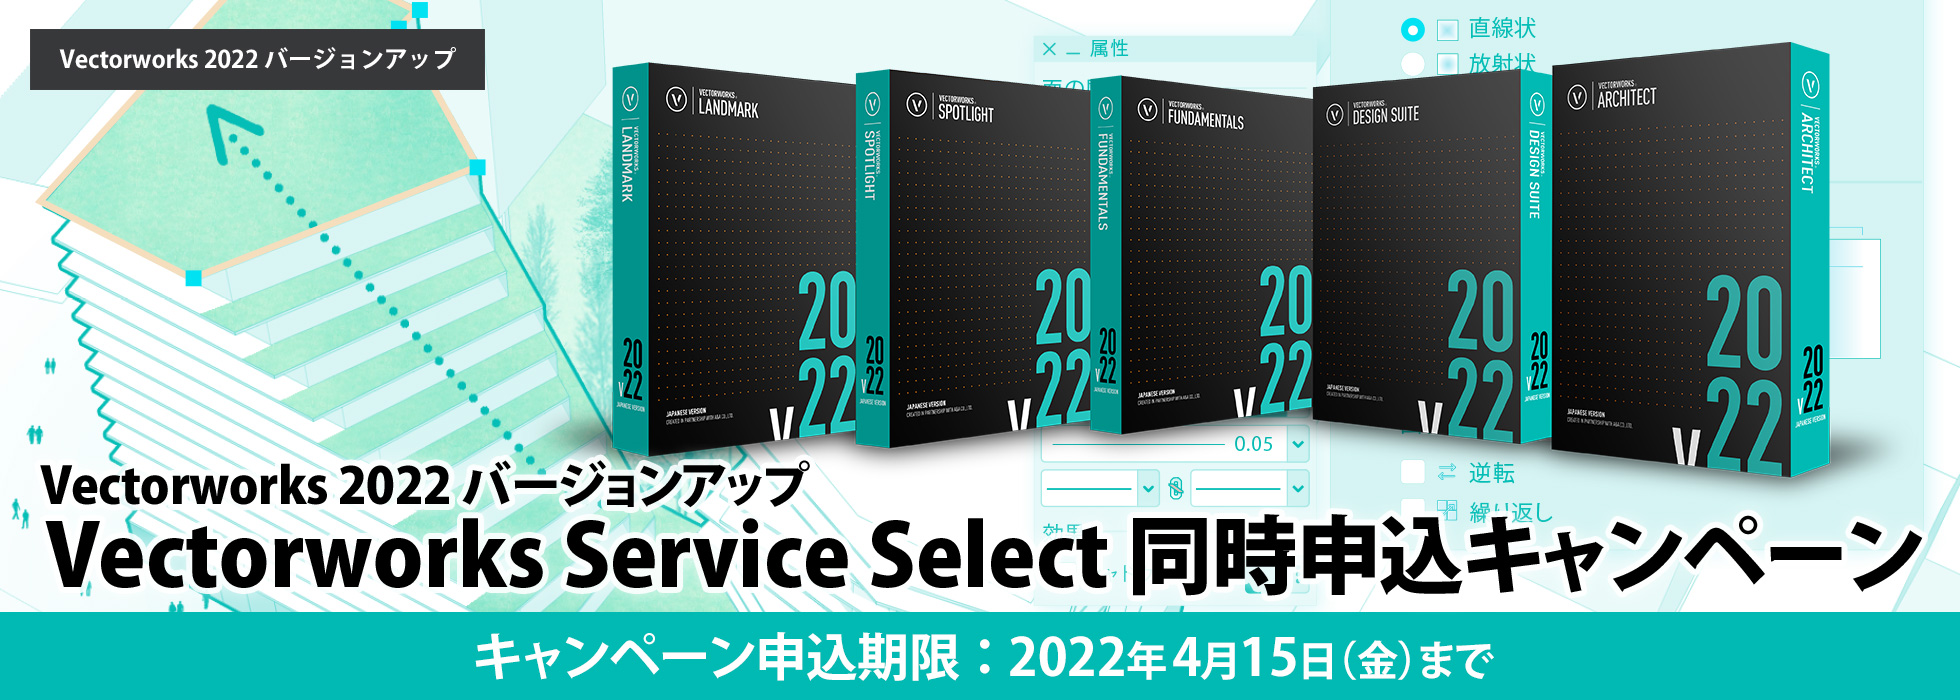 Vectorworksバージョンアップ+Service Select同時申込キャンペーン